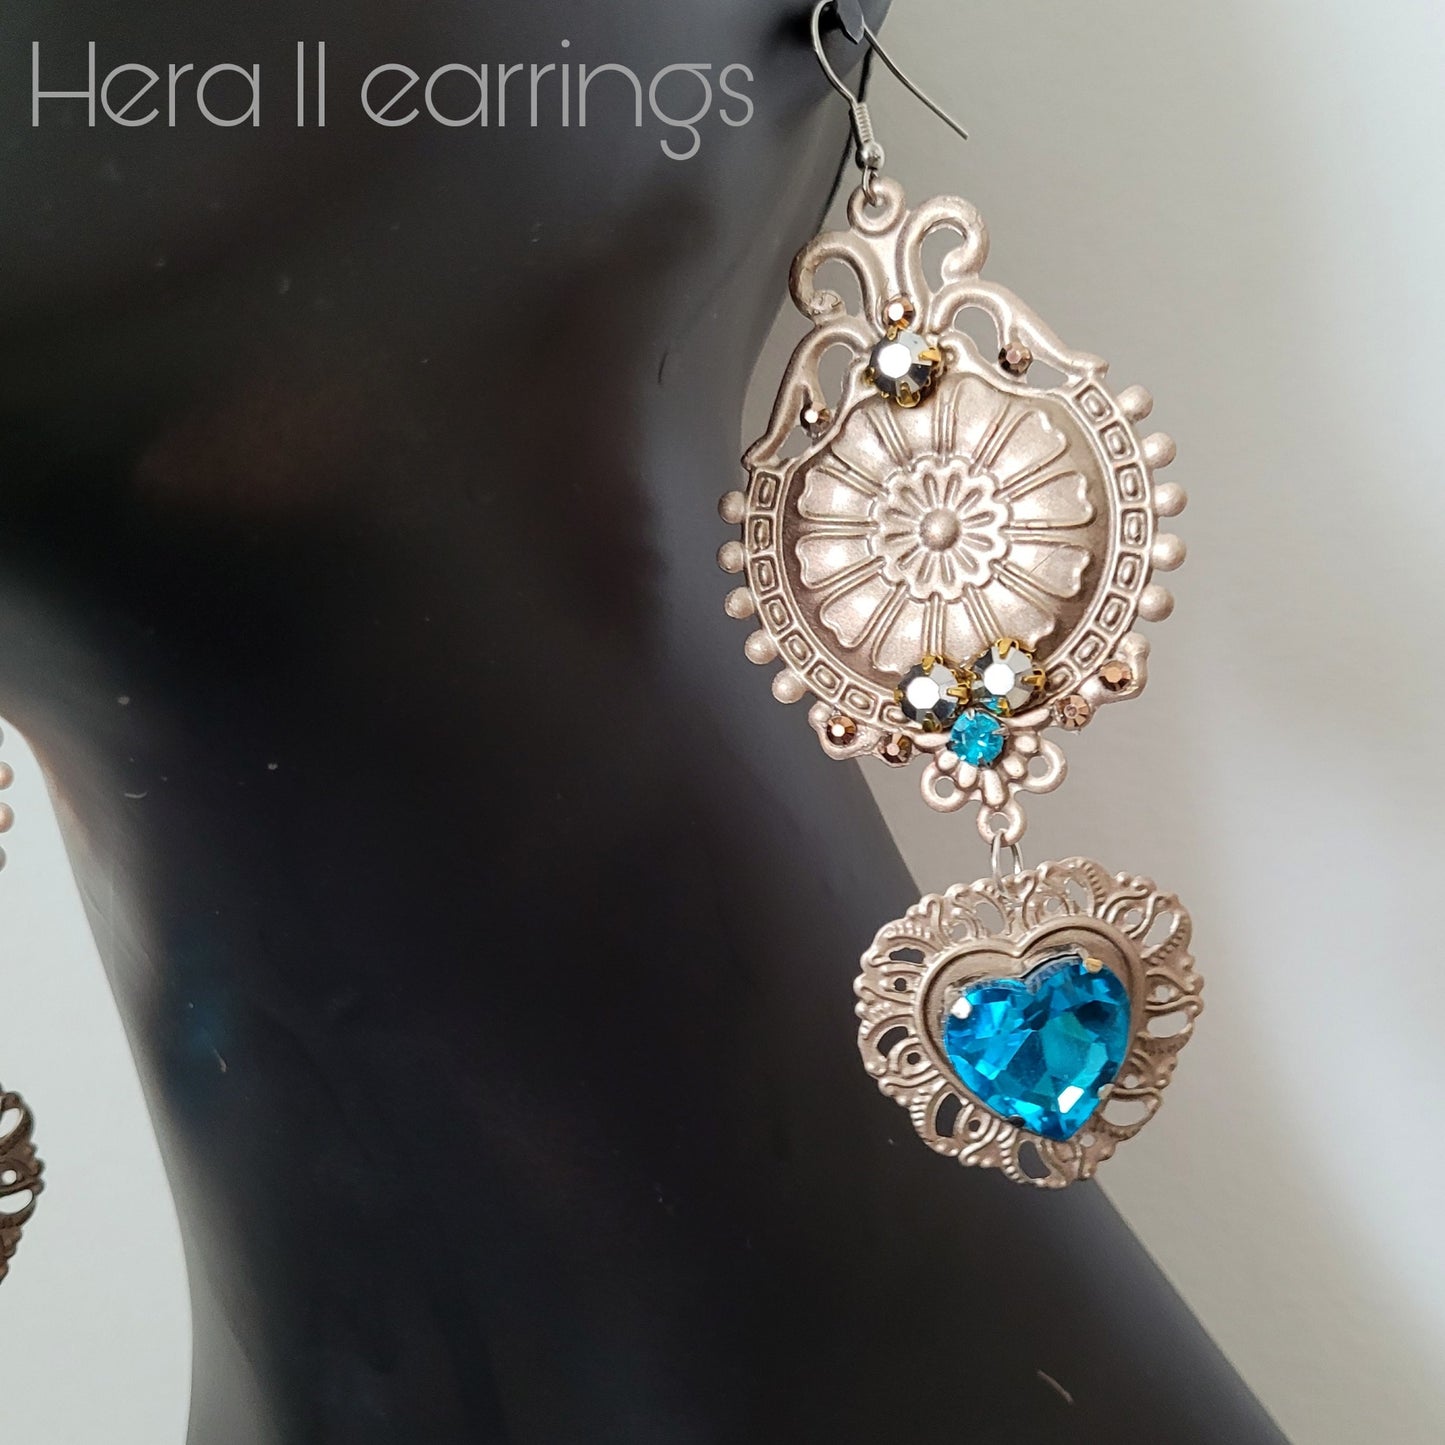 Deusa ex Machina collection: The Hera earrings